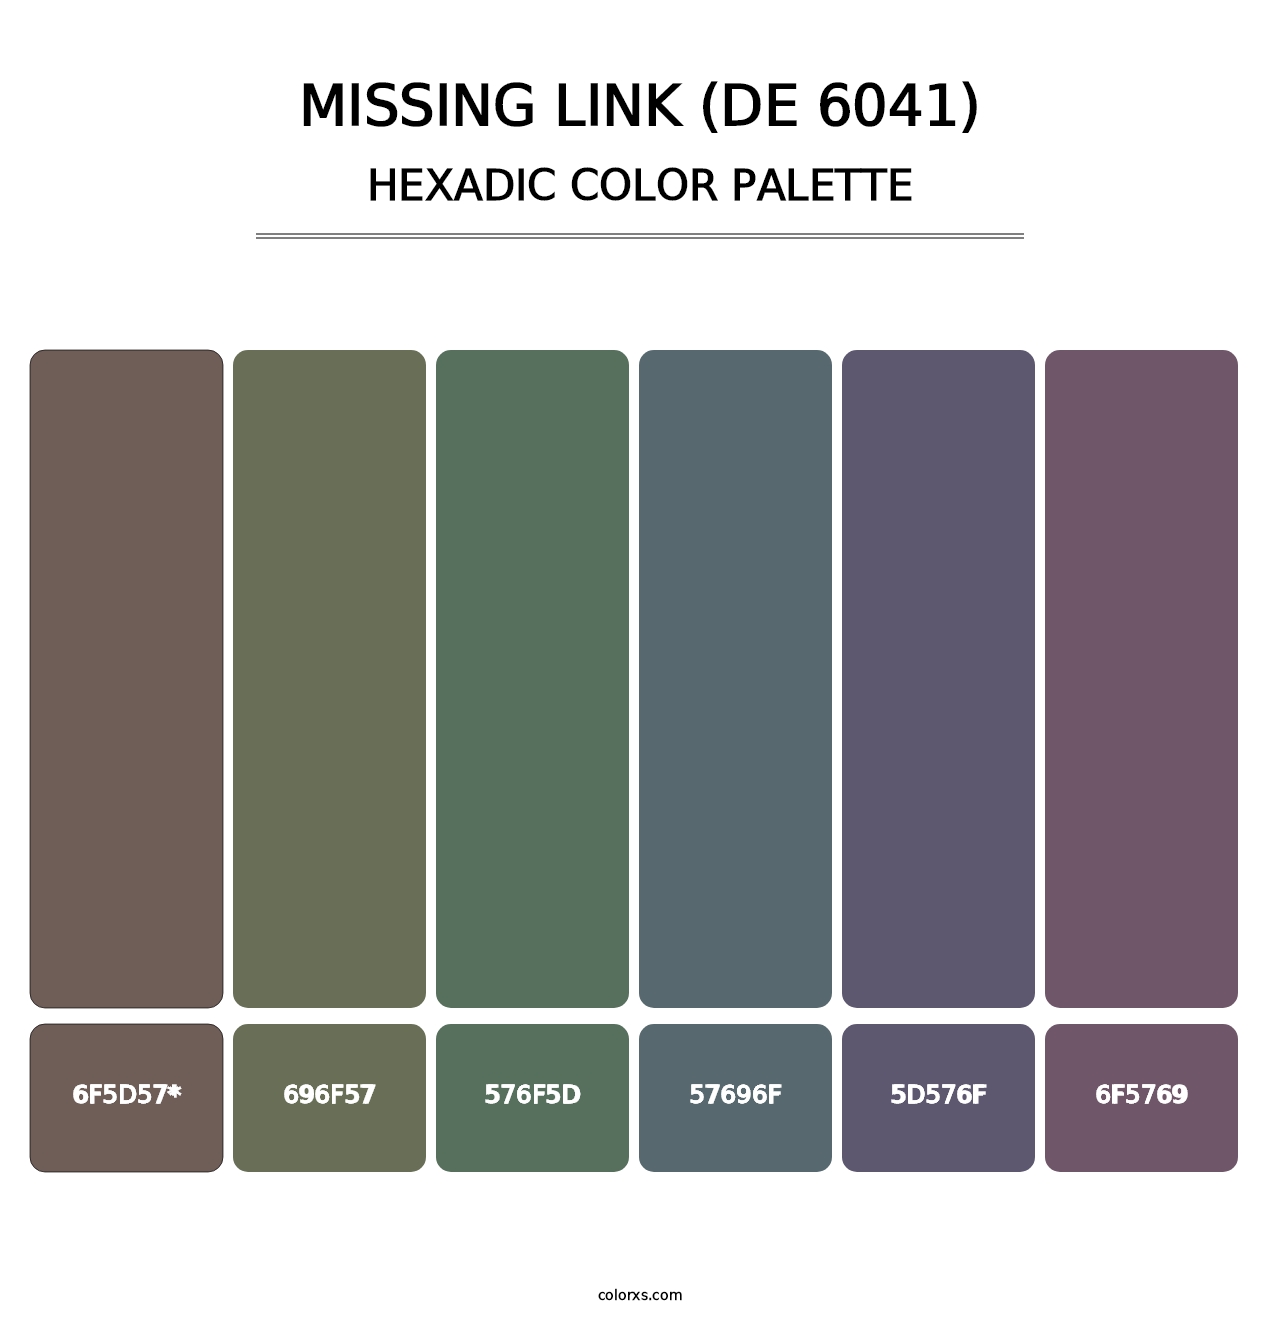 Missing Link (DE 6041) - Hexadic Color Palette